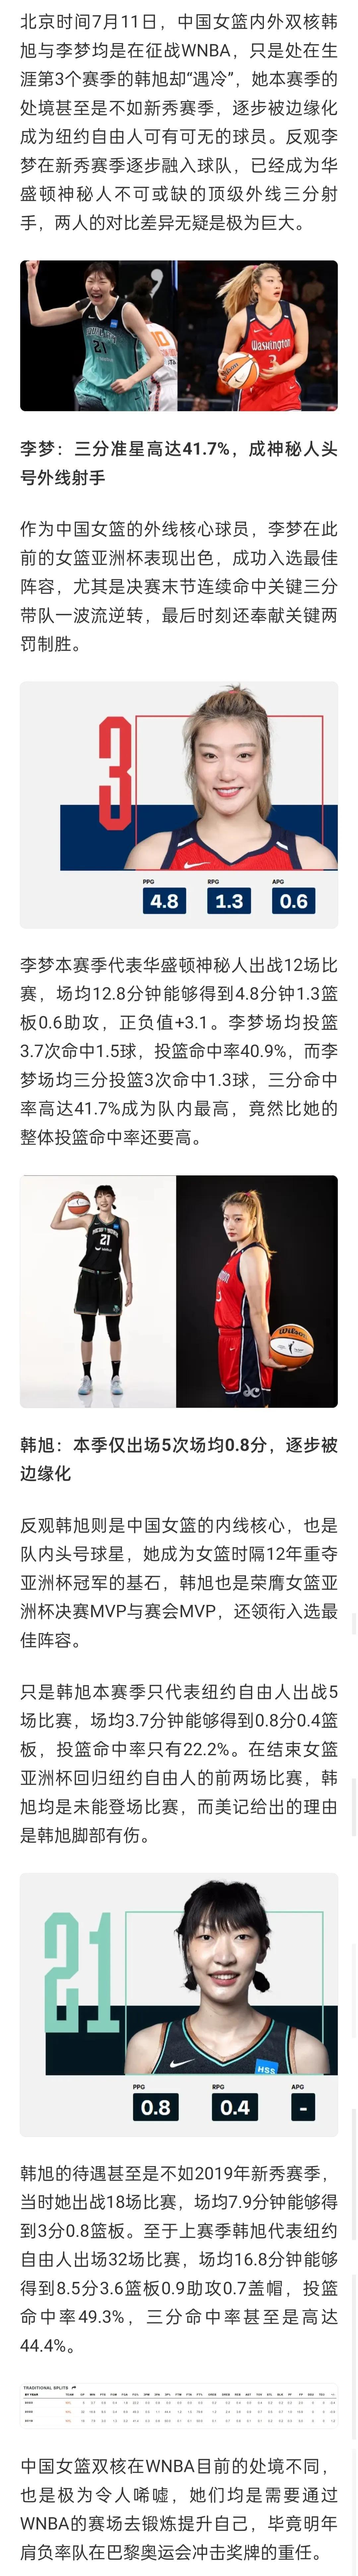 WNBA女篮双核命不同：李梦坐稳轮换成顶级射手 韩旭逐步边缘化。

北京时间7月